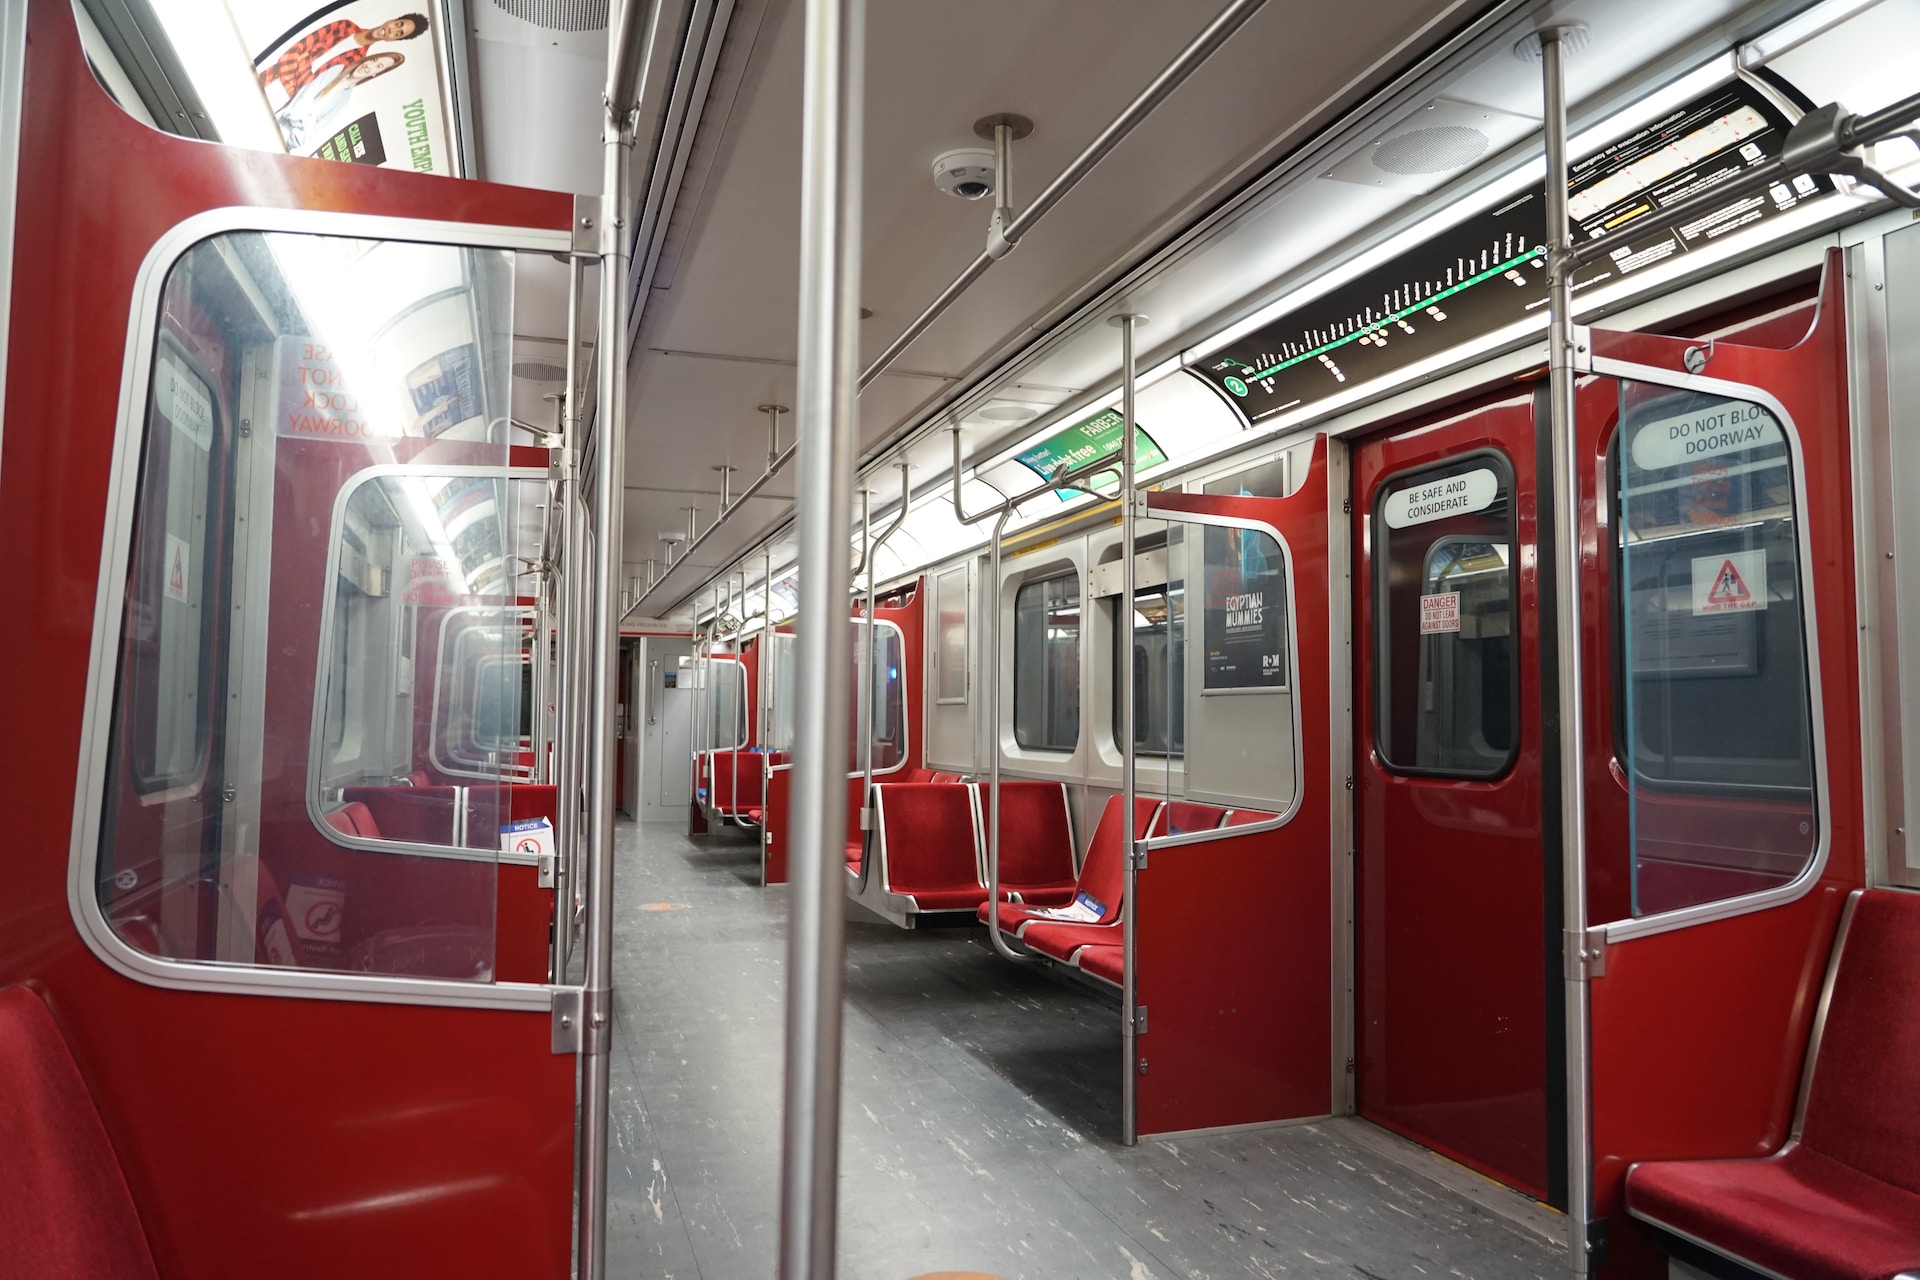 The inside of an empty TTC subway train